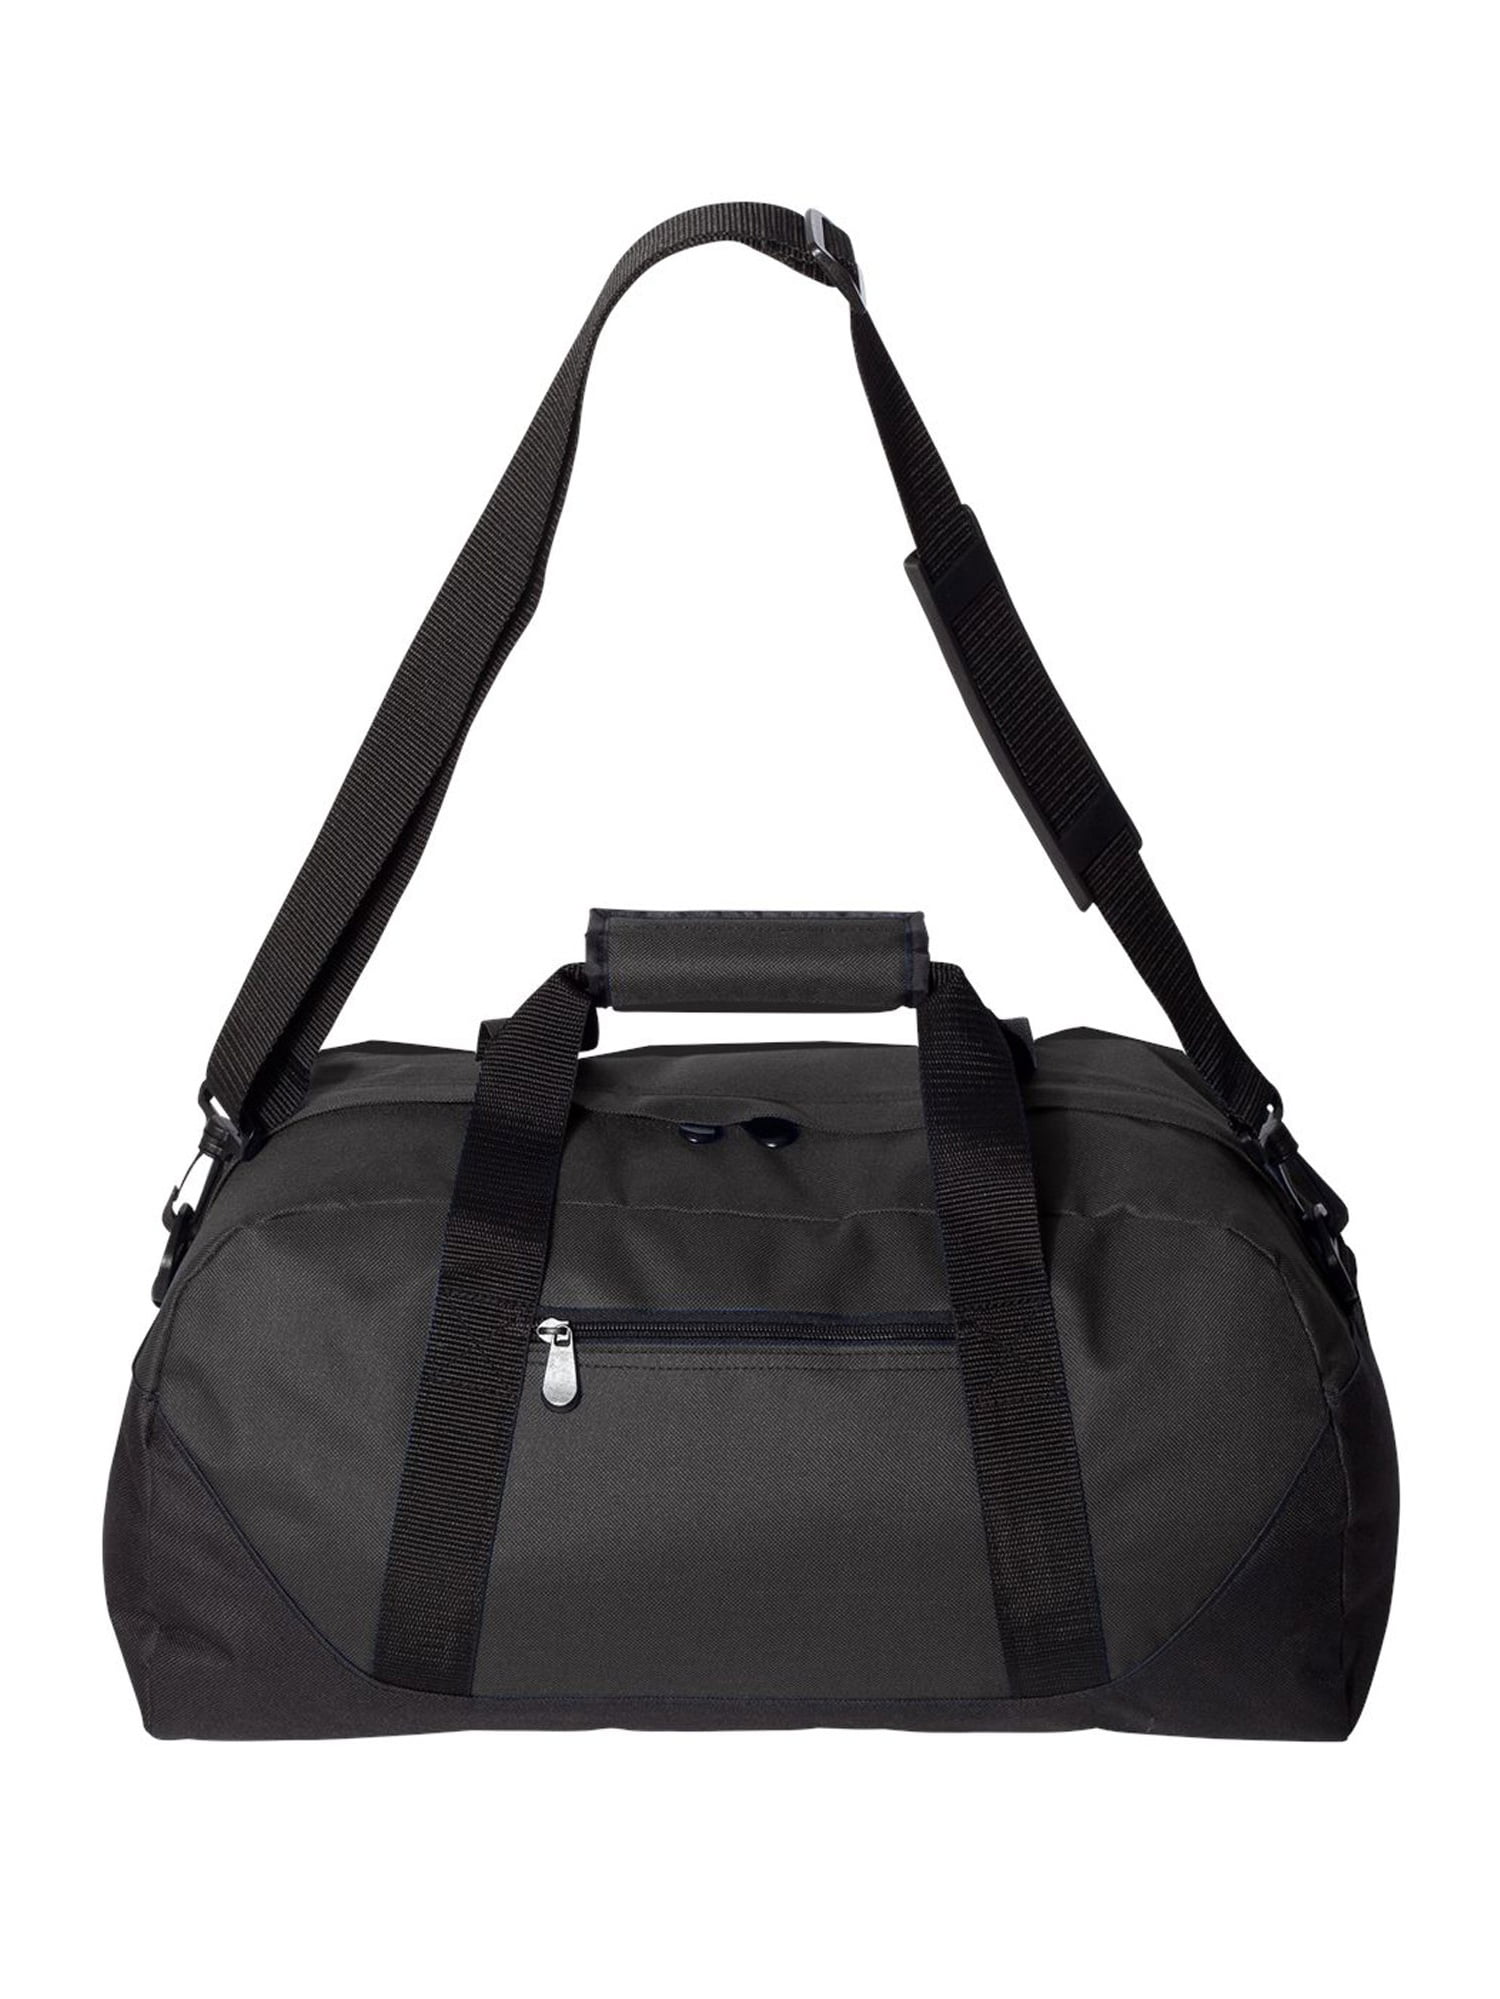 Womens Bags Duffel bags and weekend bags Skechers Synthetic Small Locker Duffle in Black 